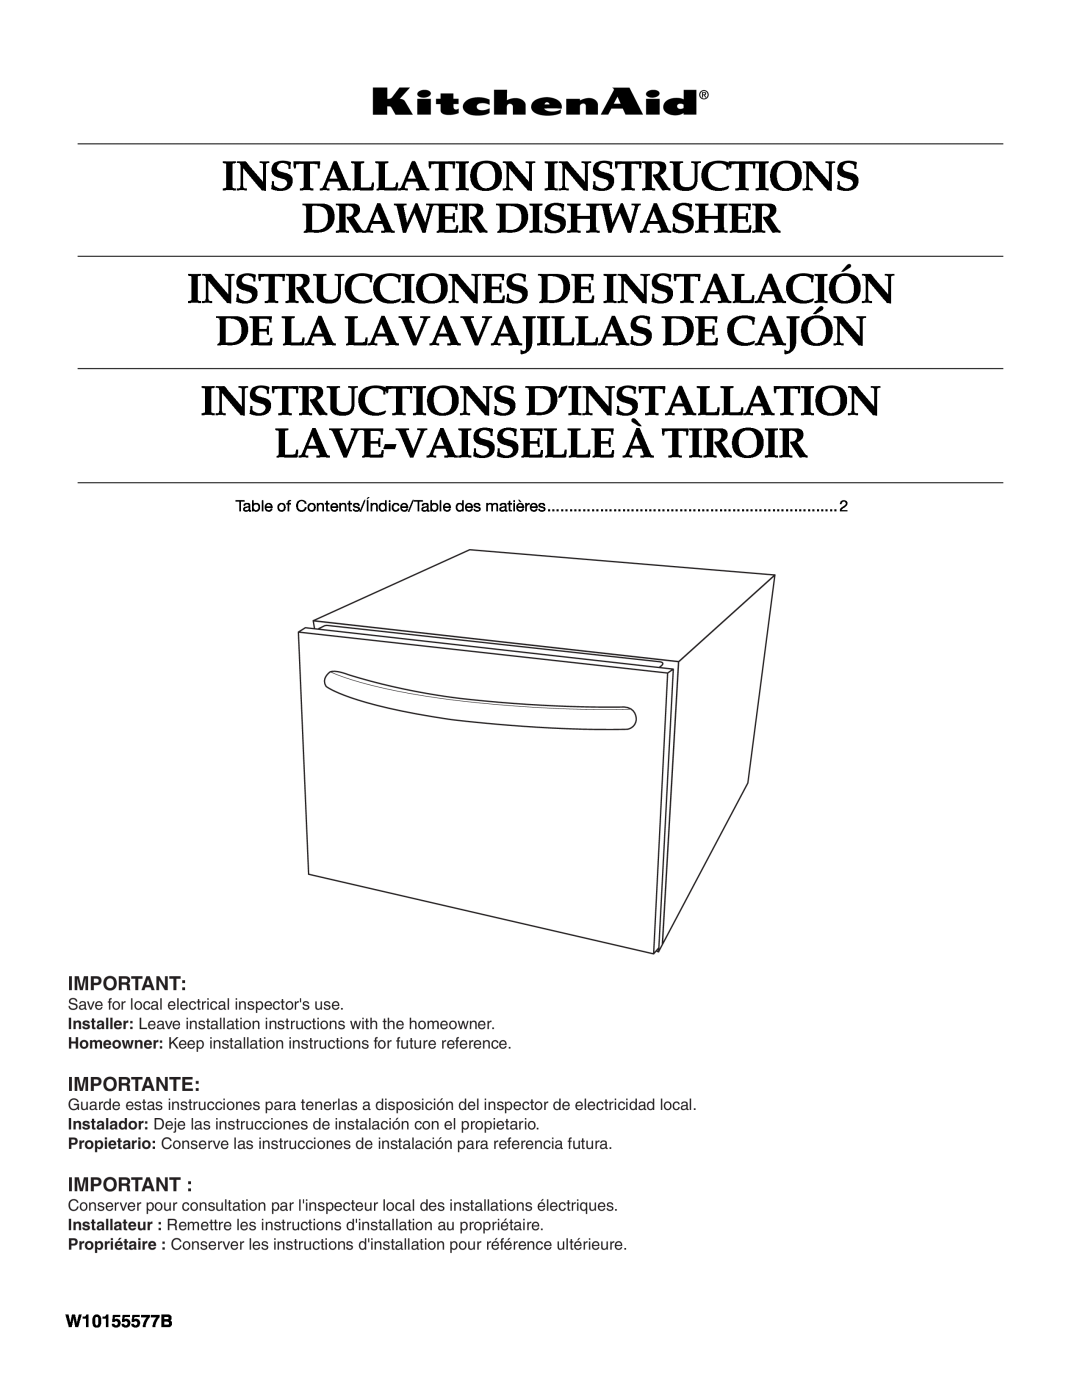 KitchenAid KUDD03STBL installation instructions Installation Instructions Drawer Dishwasher, Importante, W10155577B 